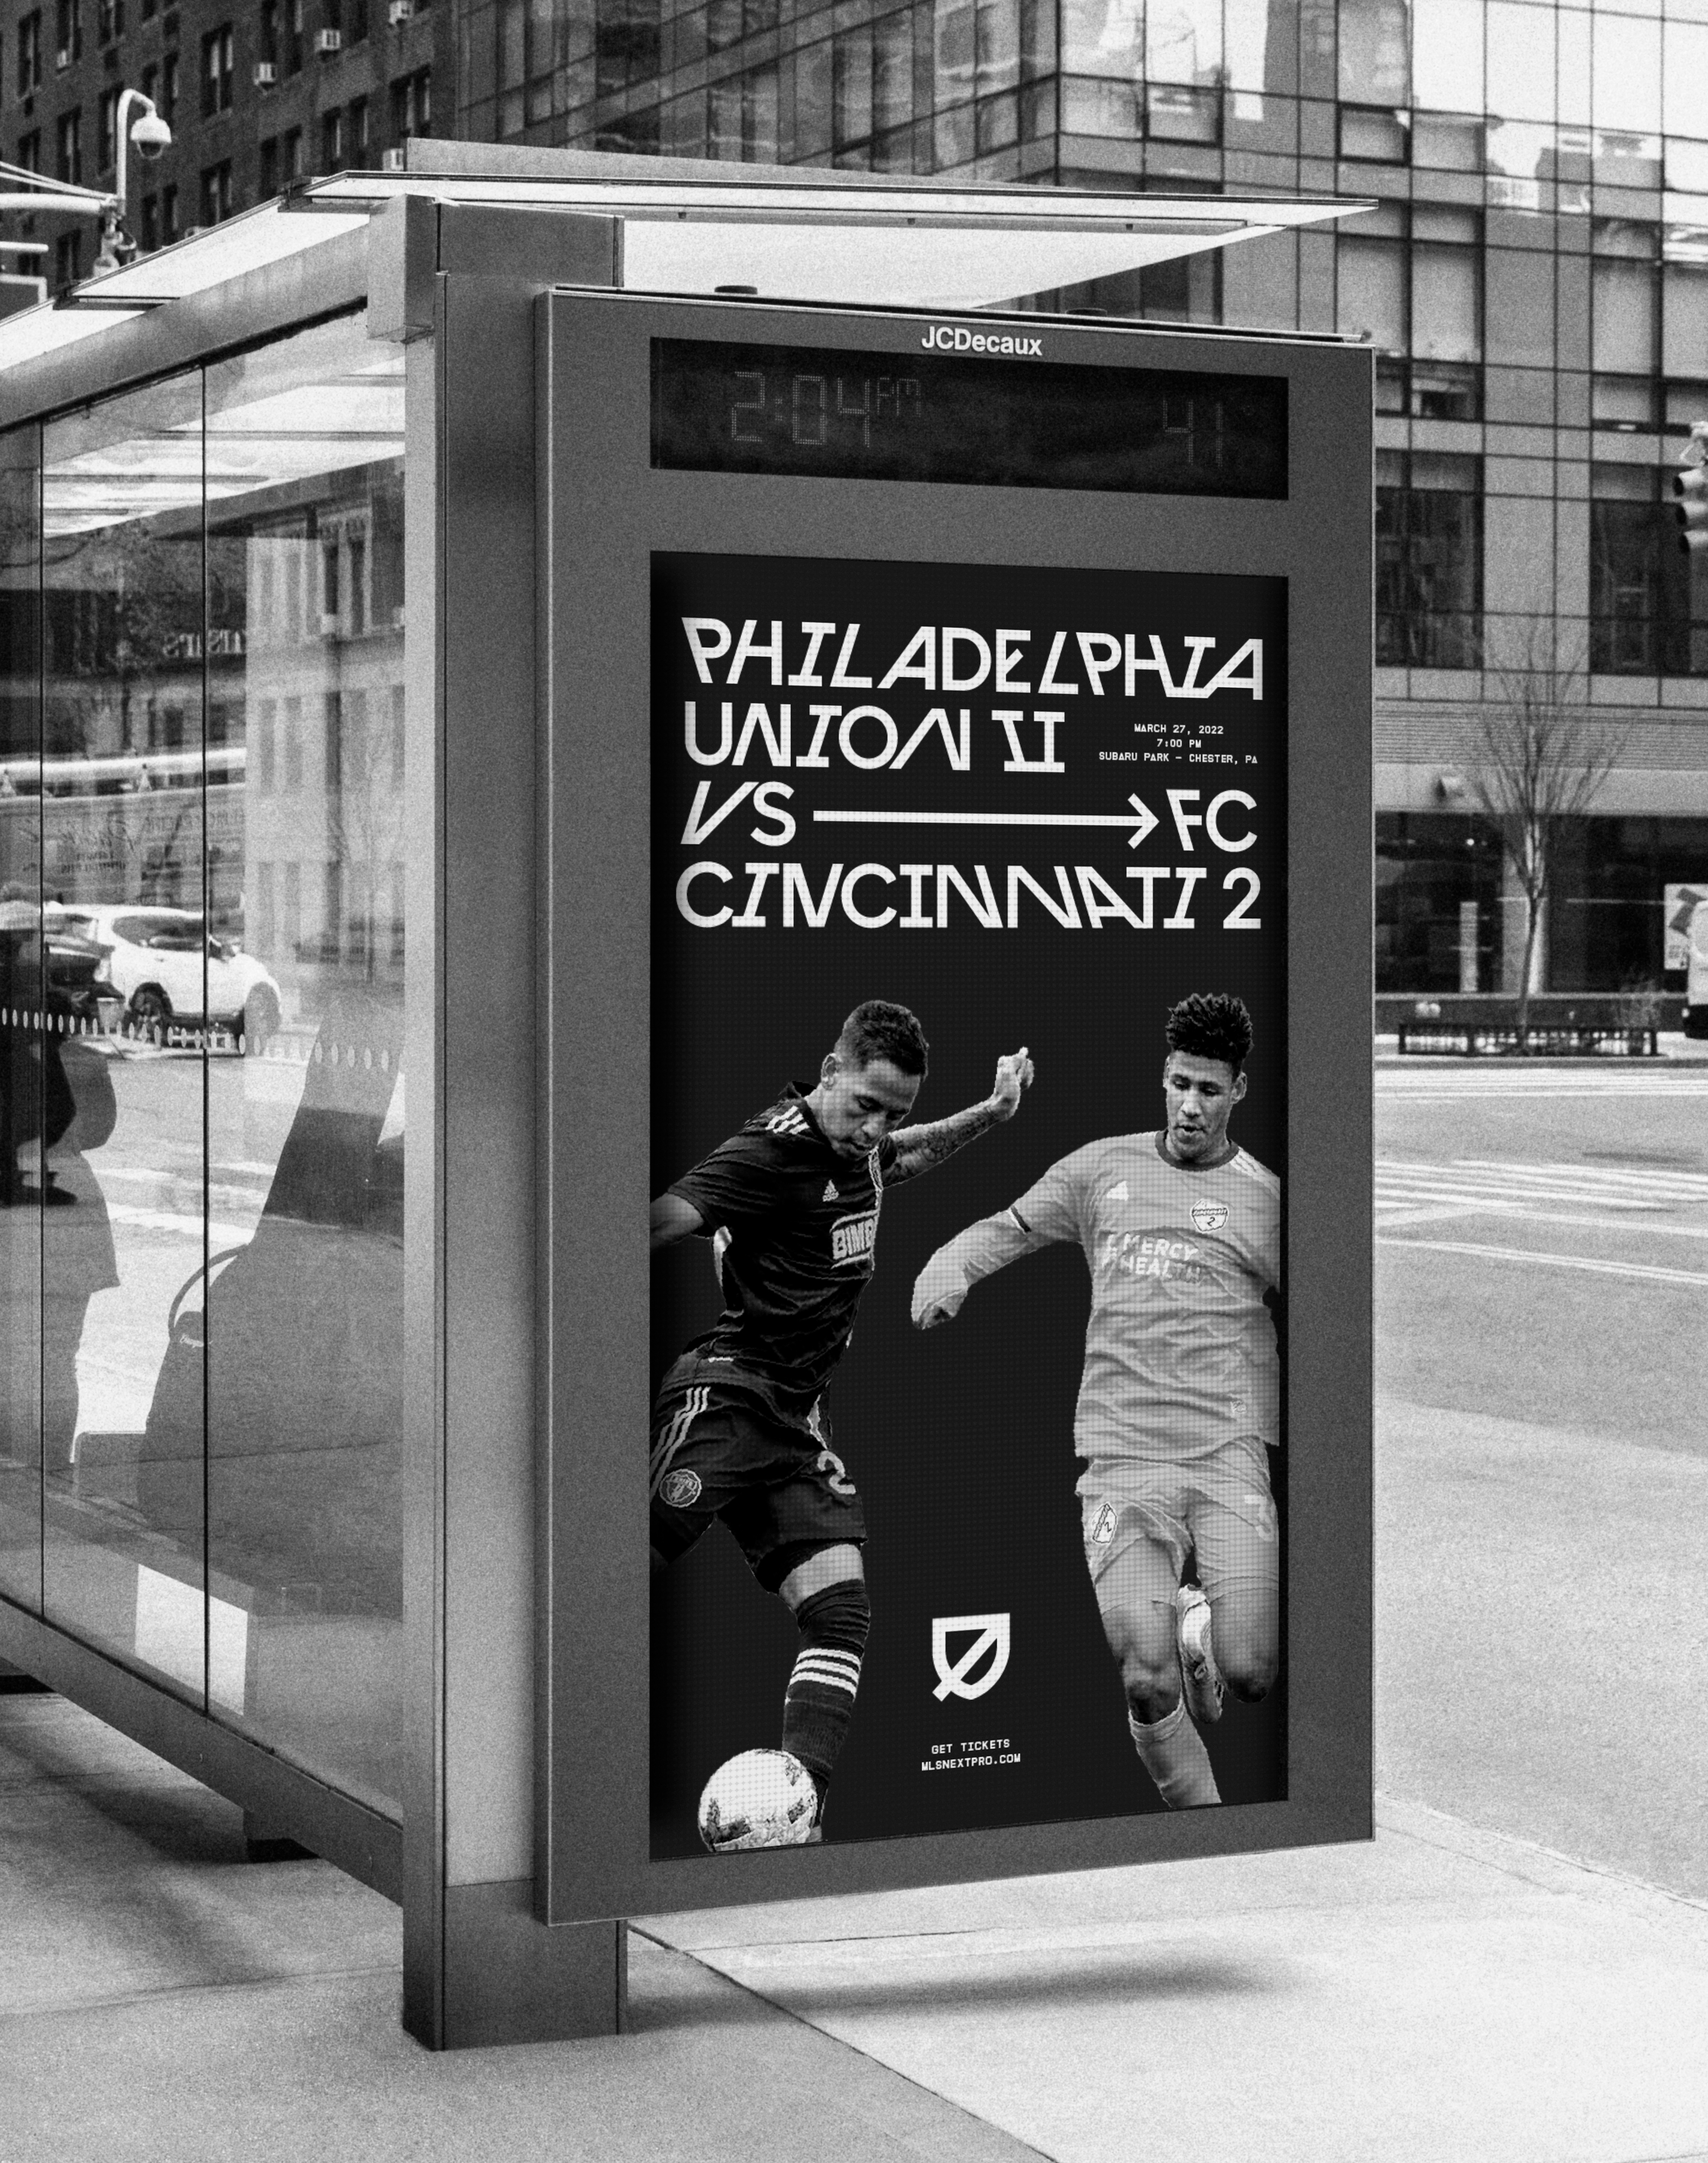 Bus Shelter Ad: Philadelphia Union II VS FC Cincinnati 2